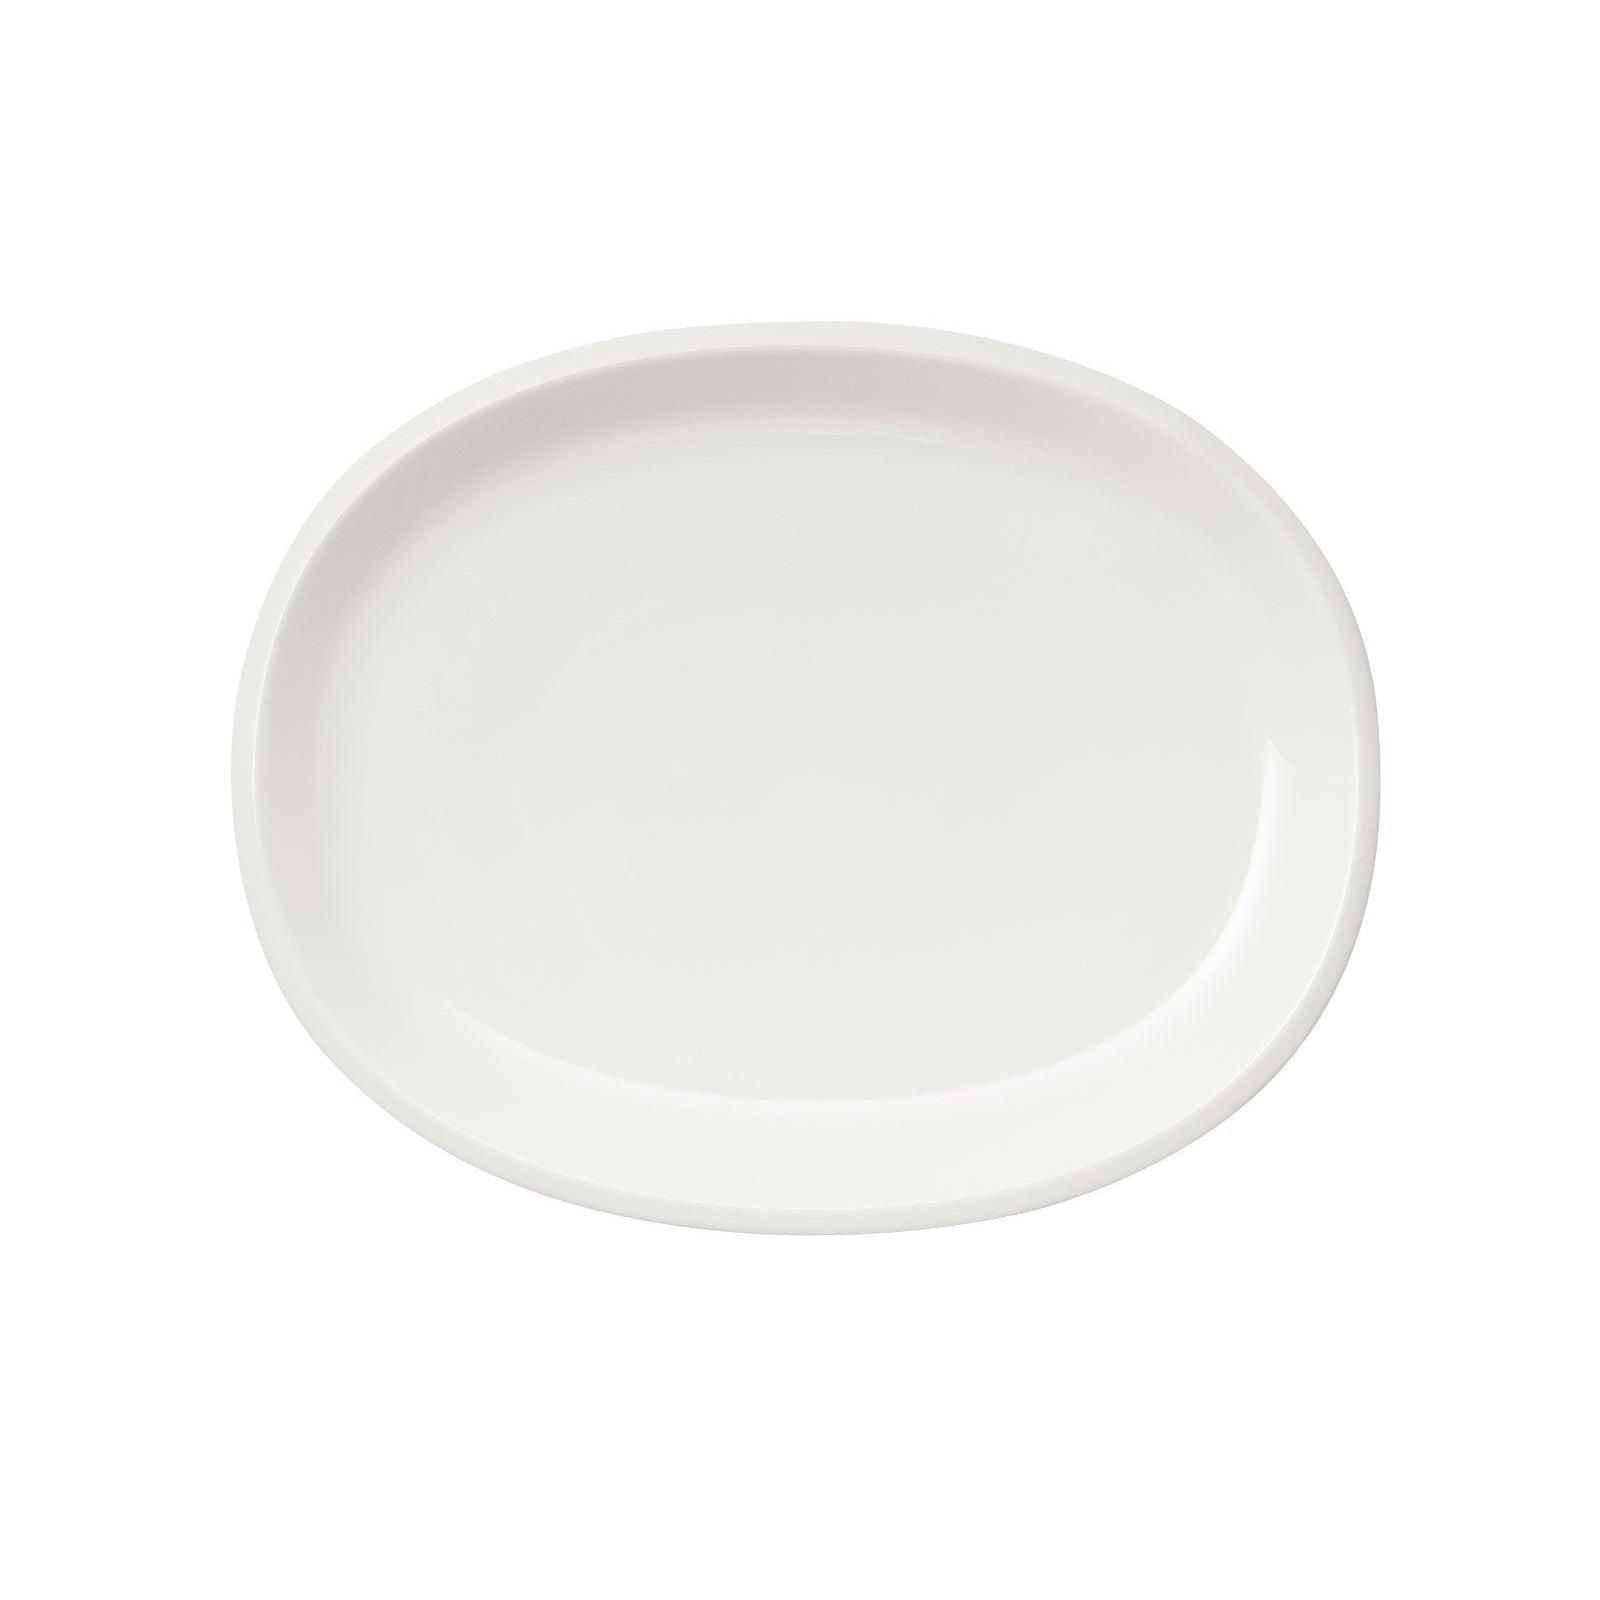 Iittala Raami Placa de servicio White, 35 cm